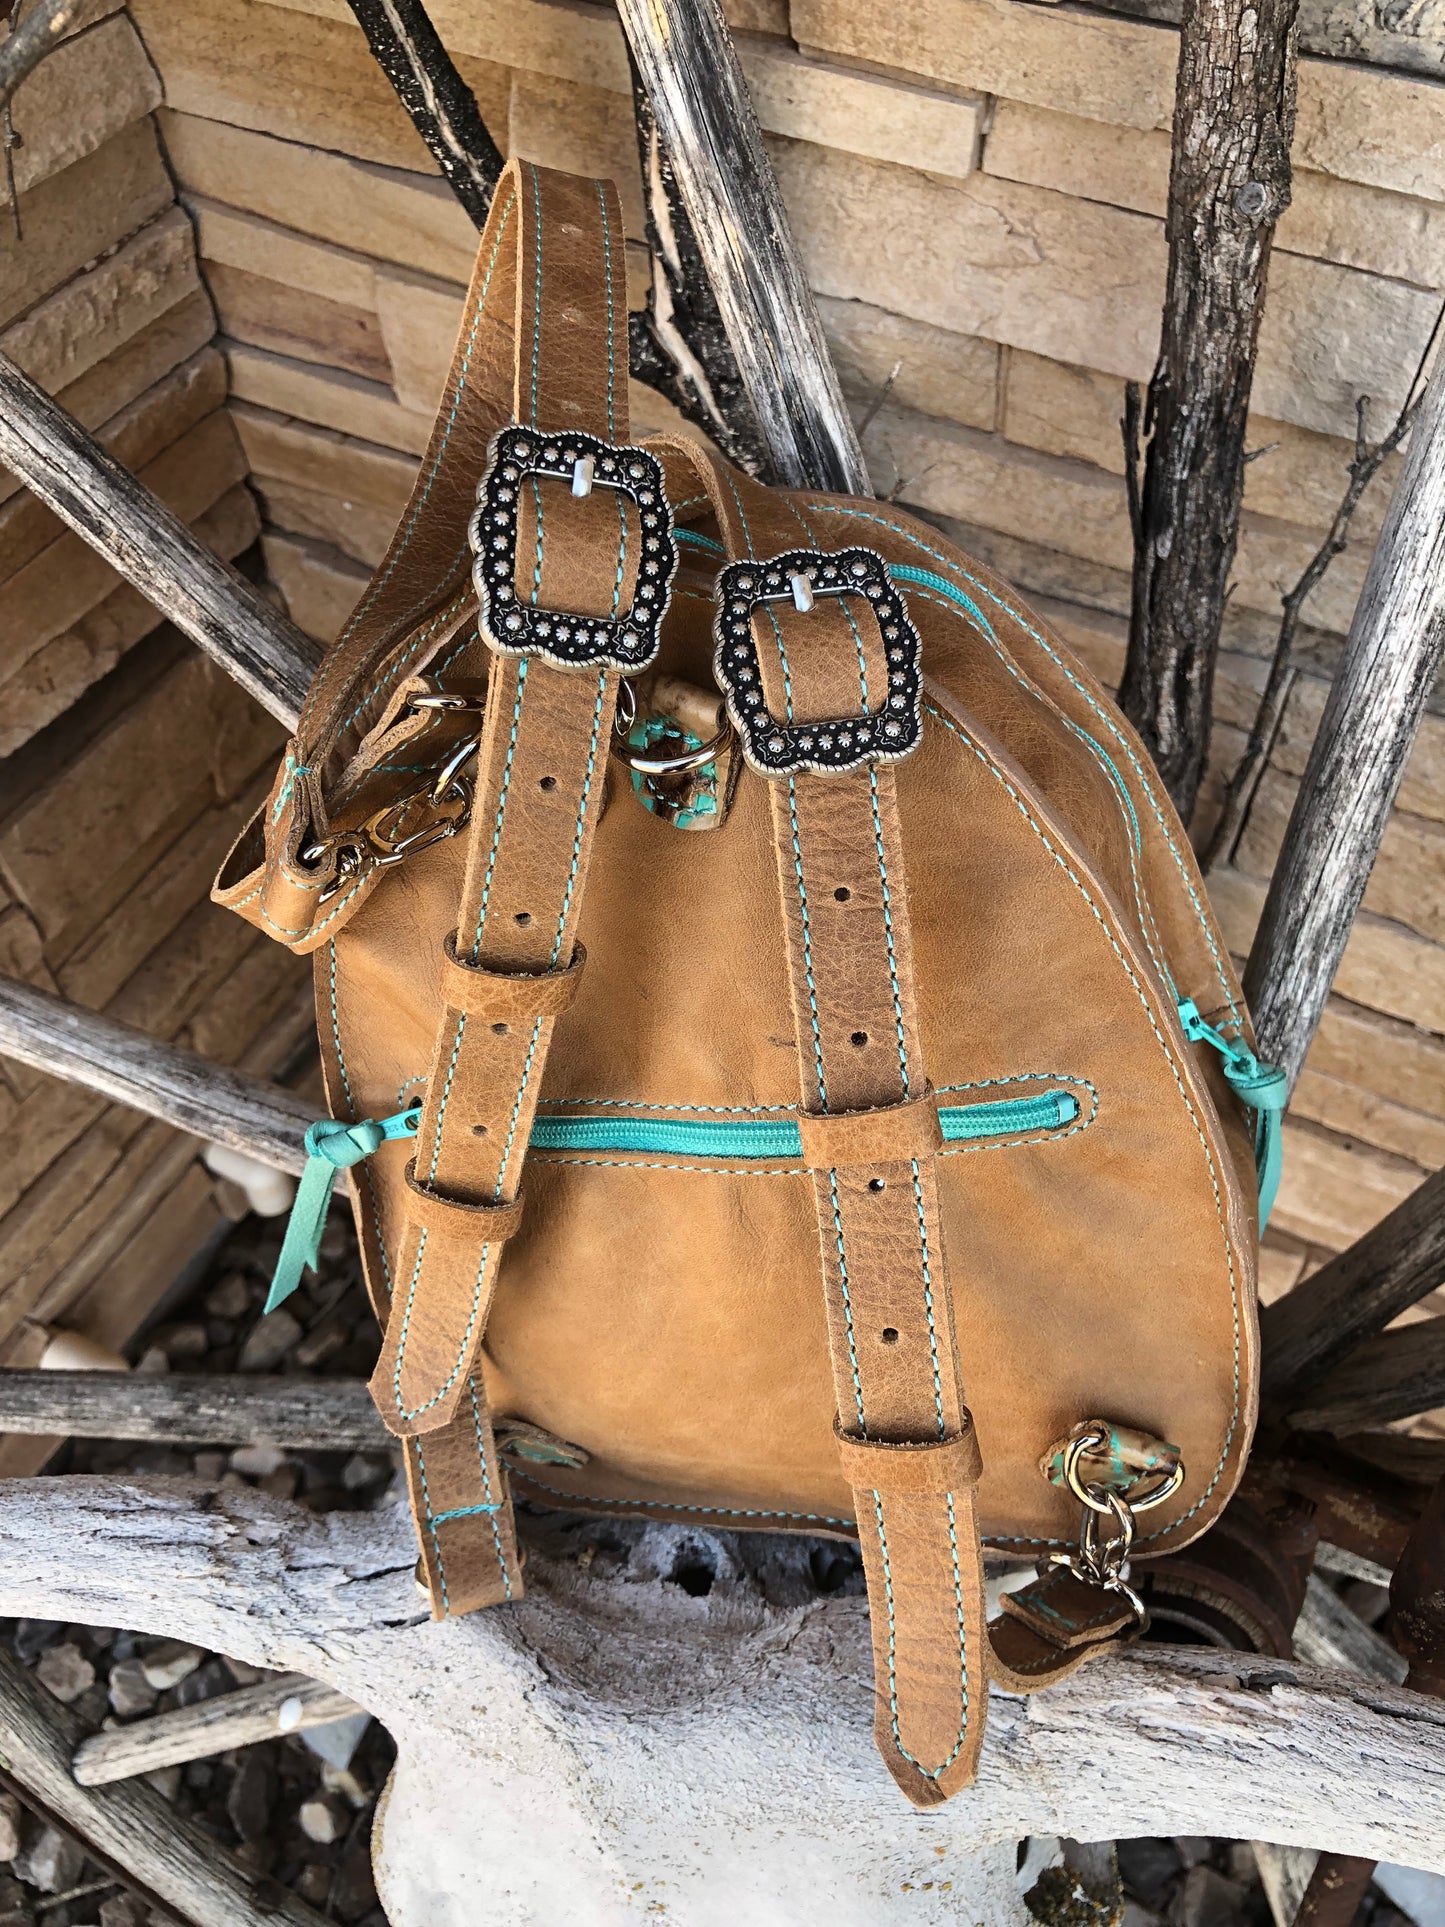 Southwestern tooled leather thunderbird patch backpack purse.